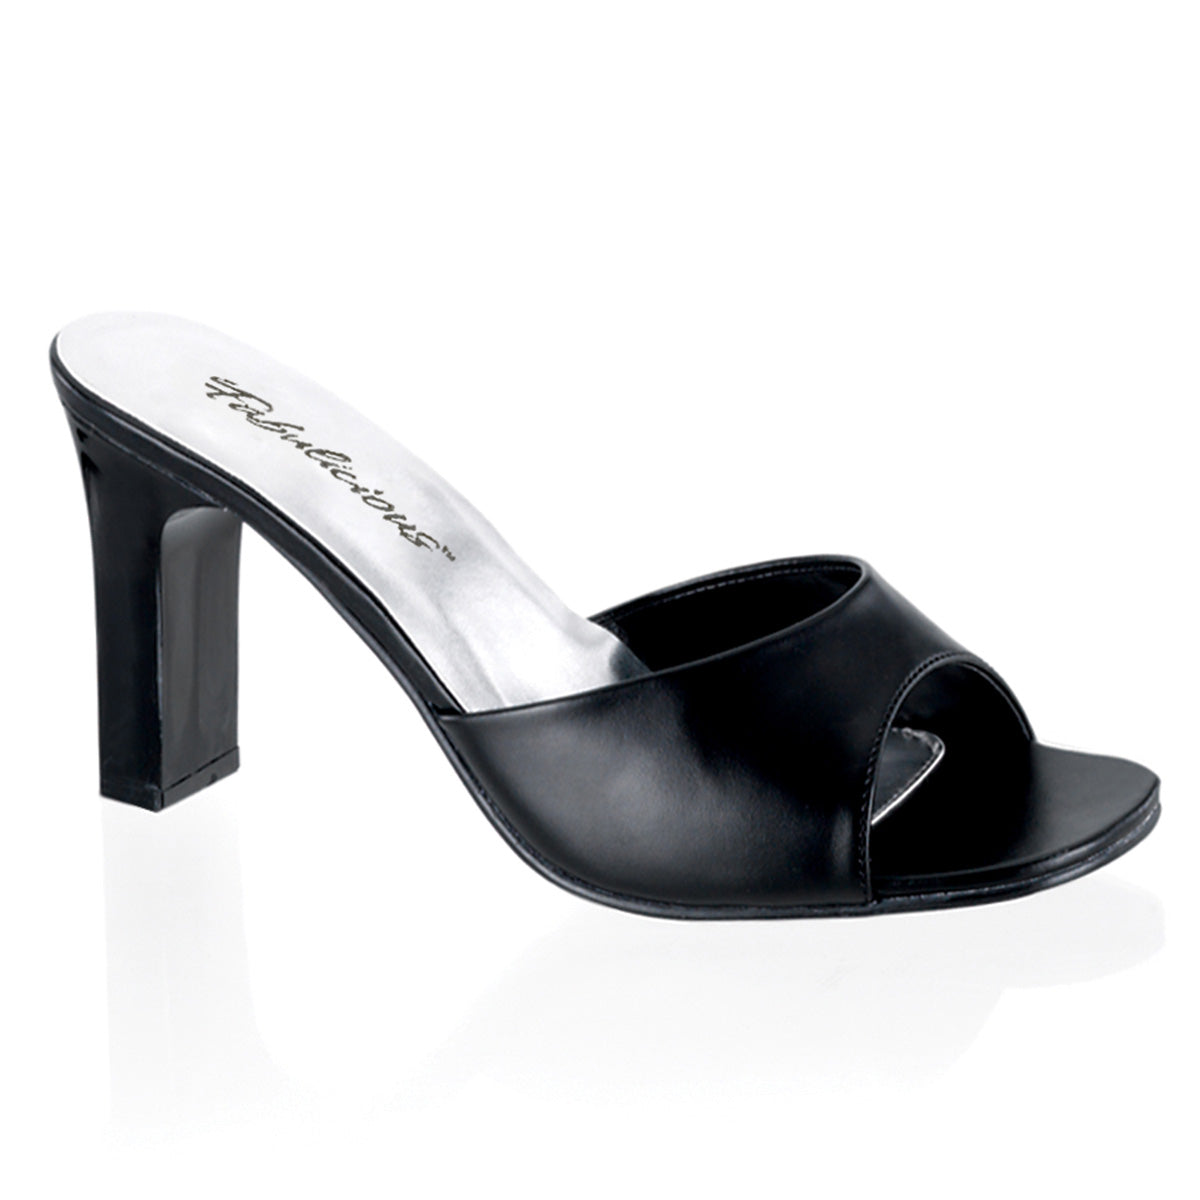 ROMANCE-301-2 Fabulicious 3 Inch Heel Black Sexy Shoes